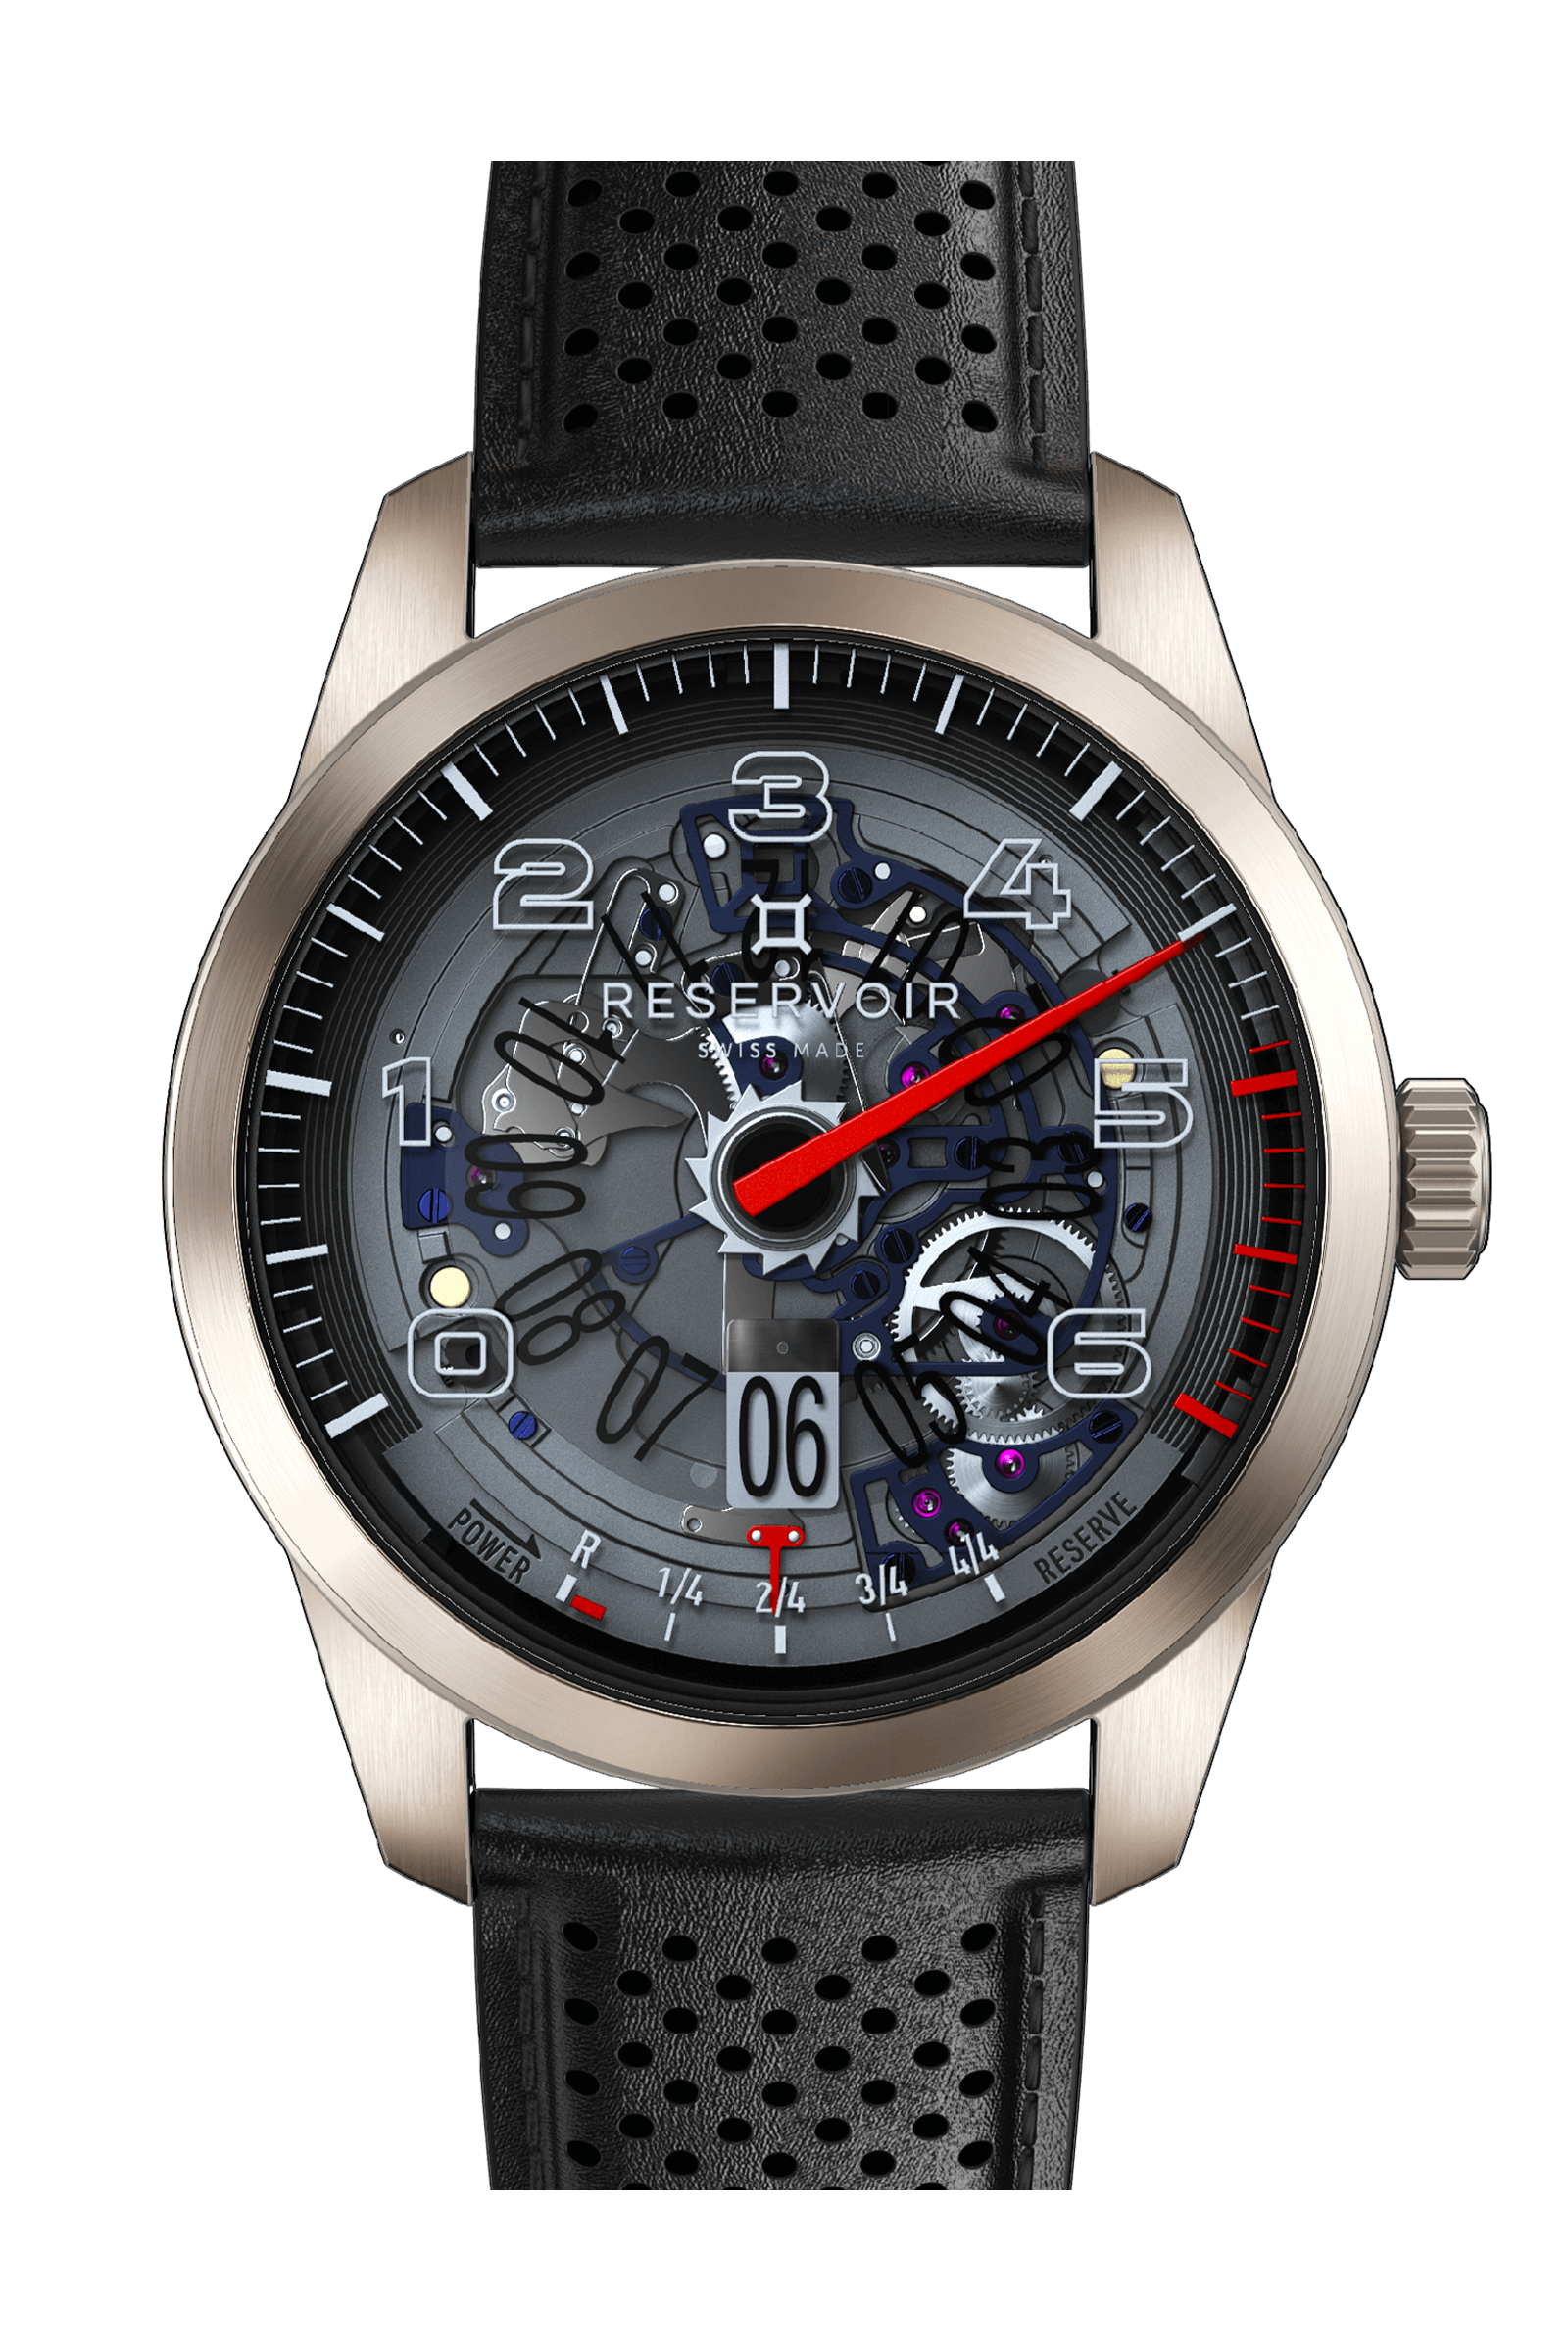 Media Editorial of Luxury RESERVOIR Watch in Black, Light Grey, and Medium Grey.